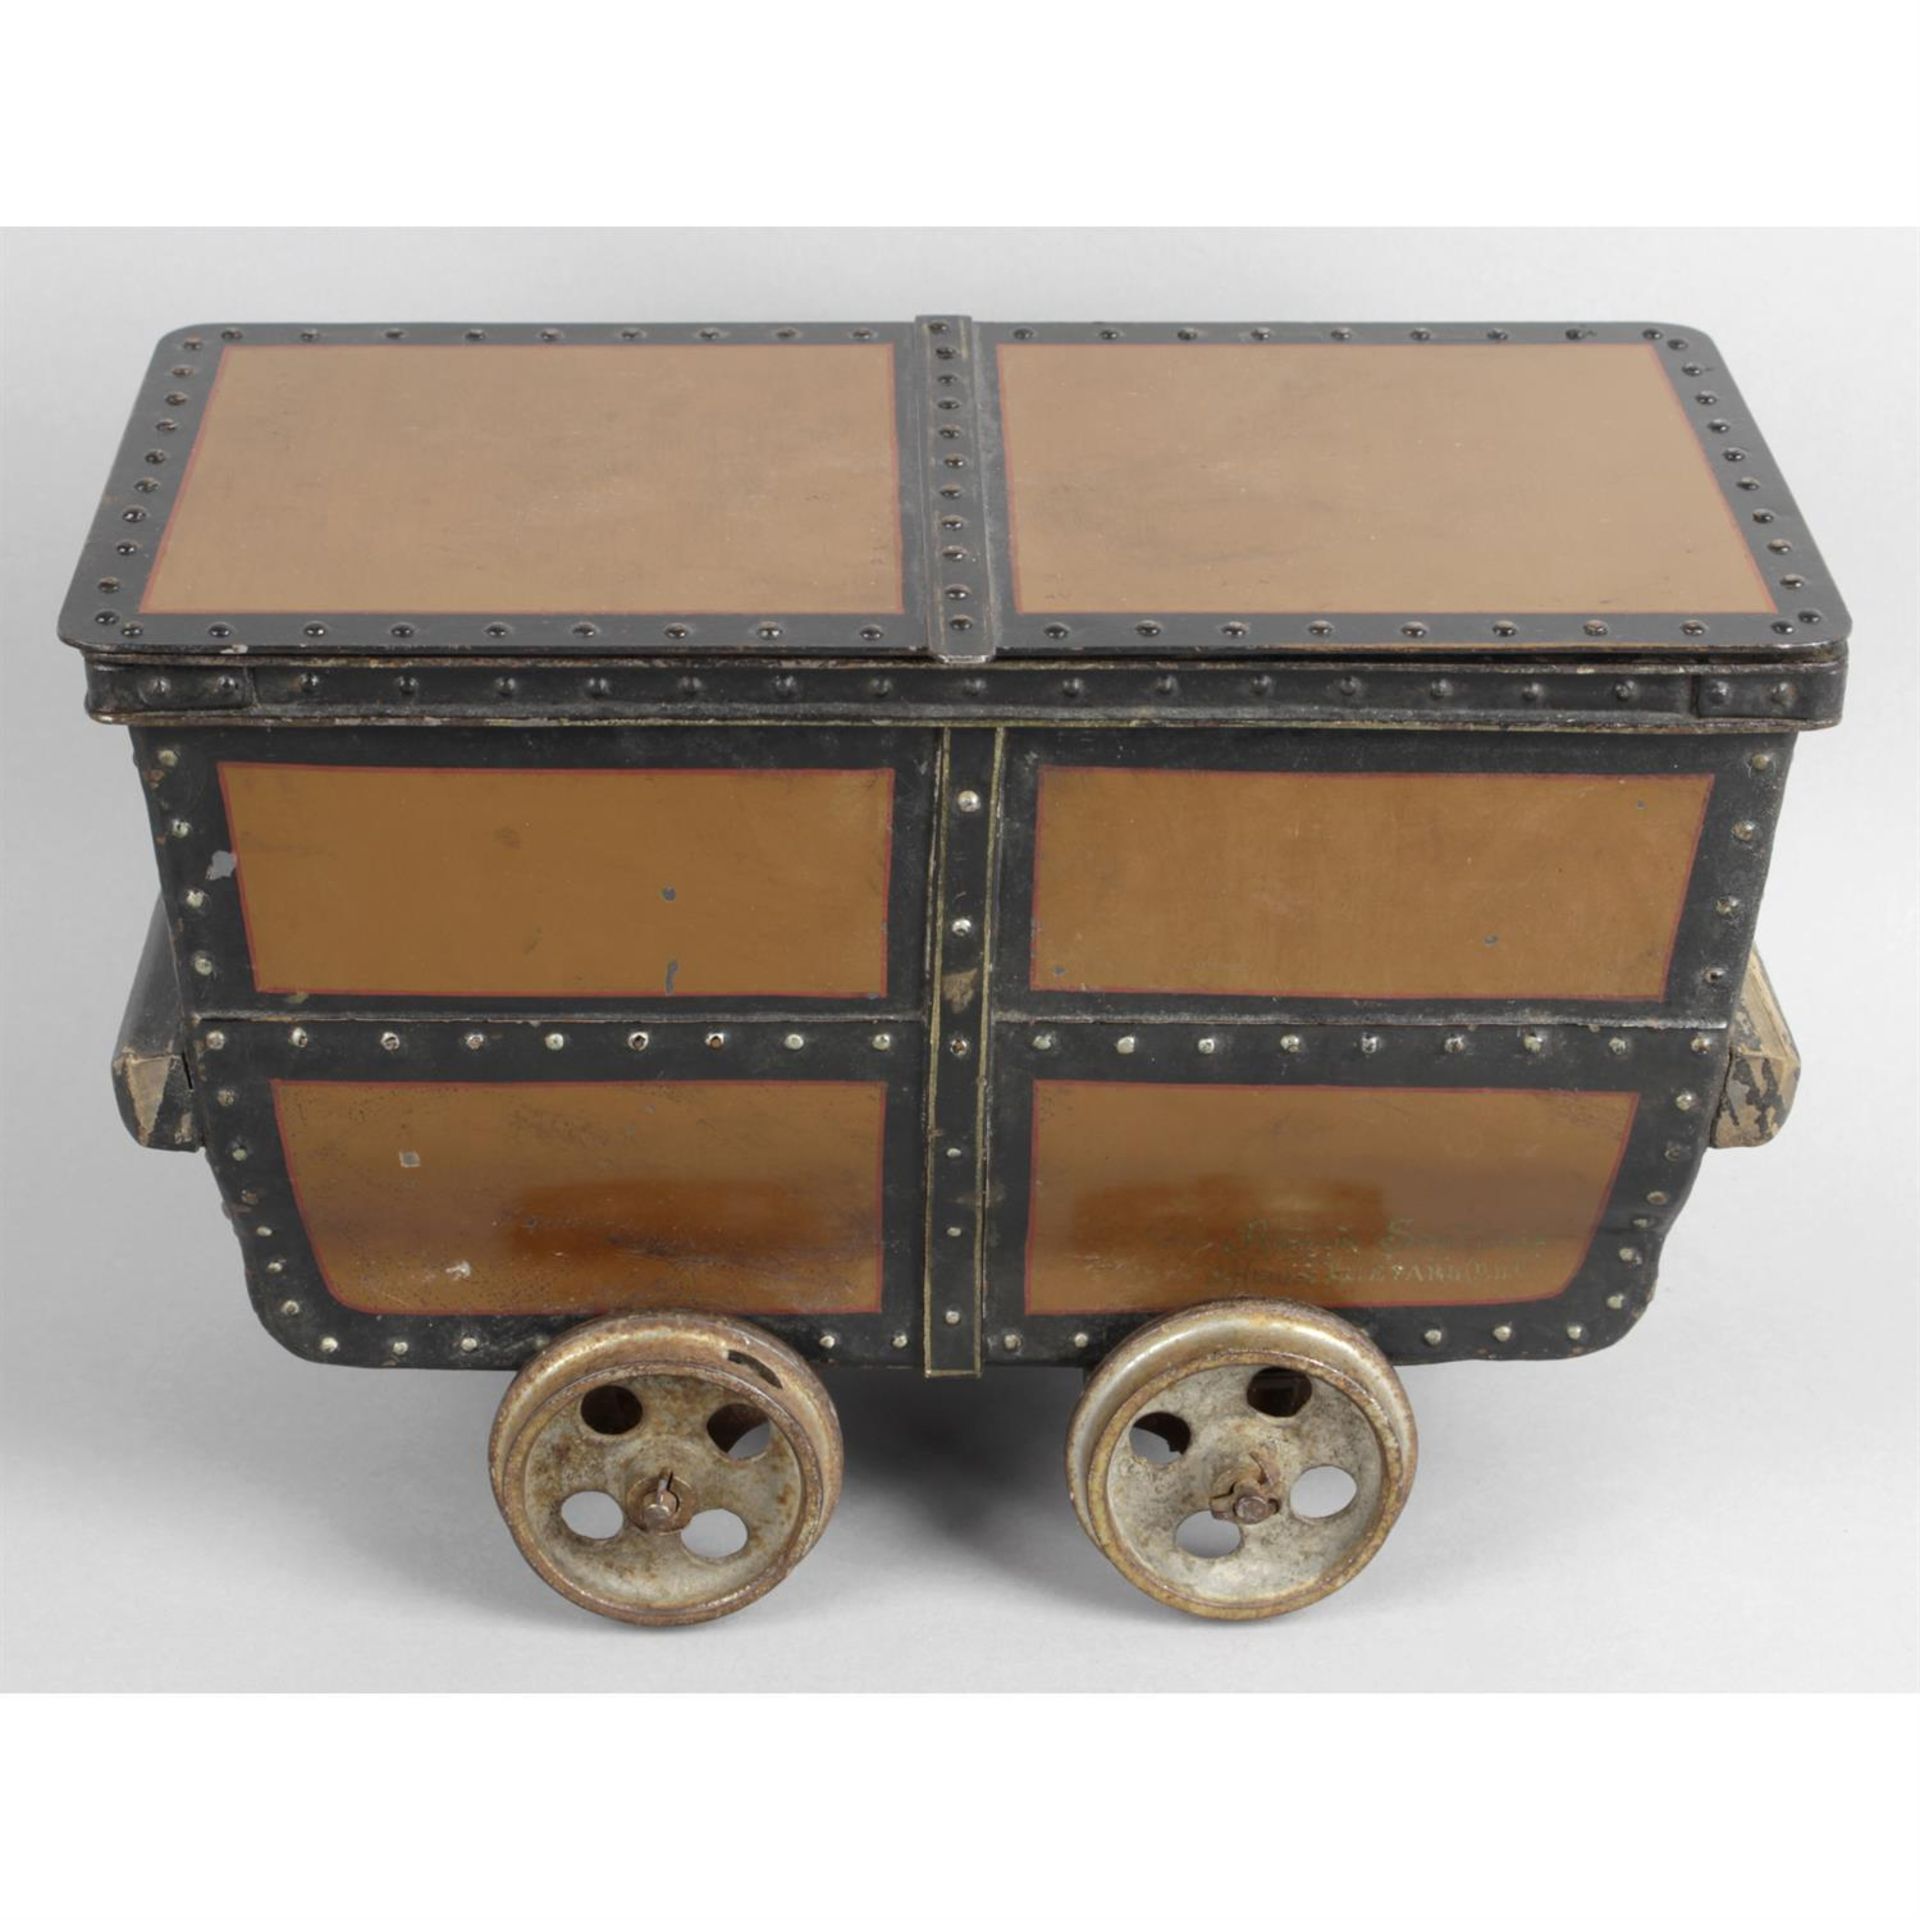 An unusual late 19th century table cigar box.